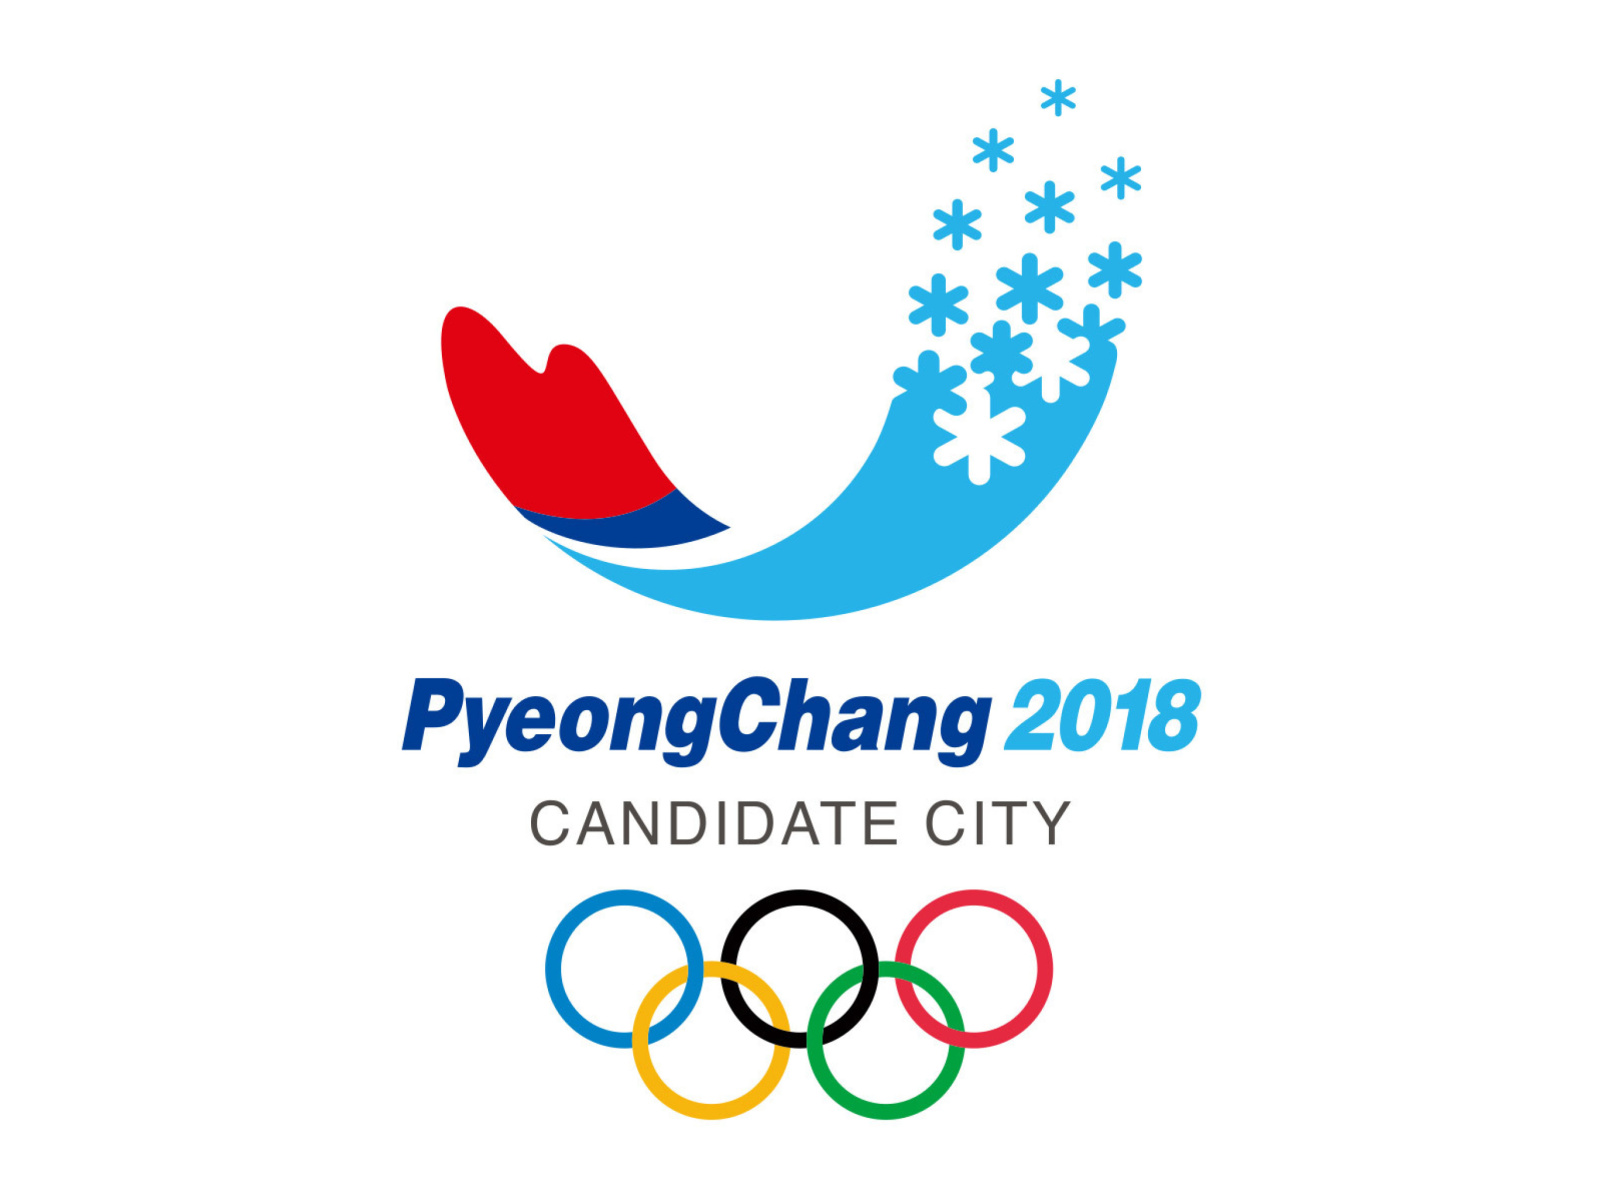 PyeongChang 2018 Olympics wallpaper 1600x1200